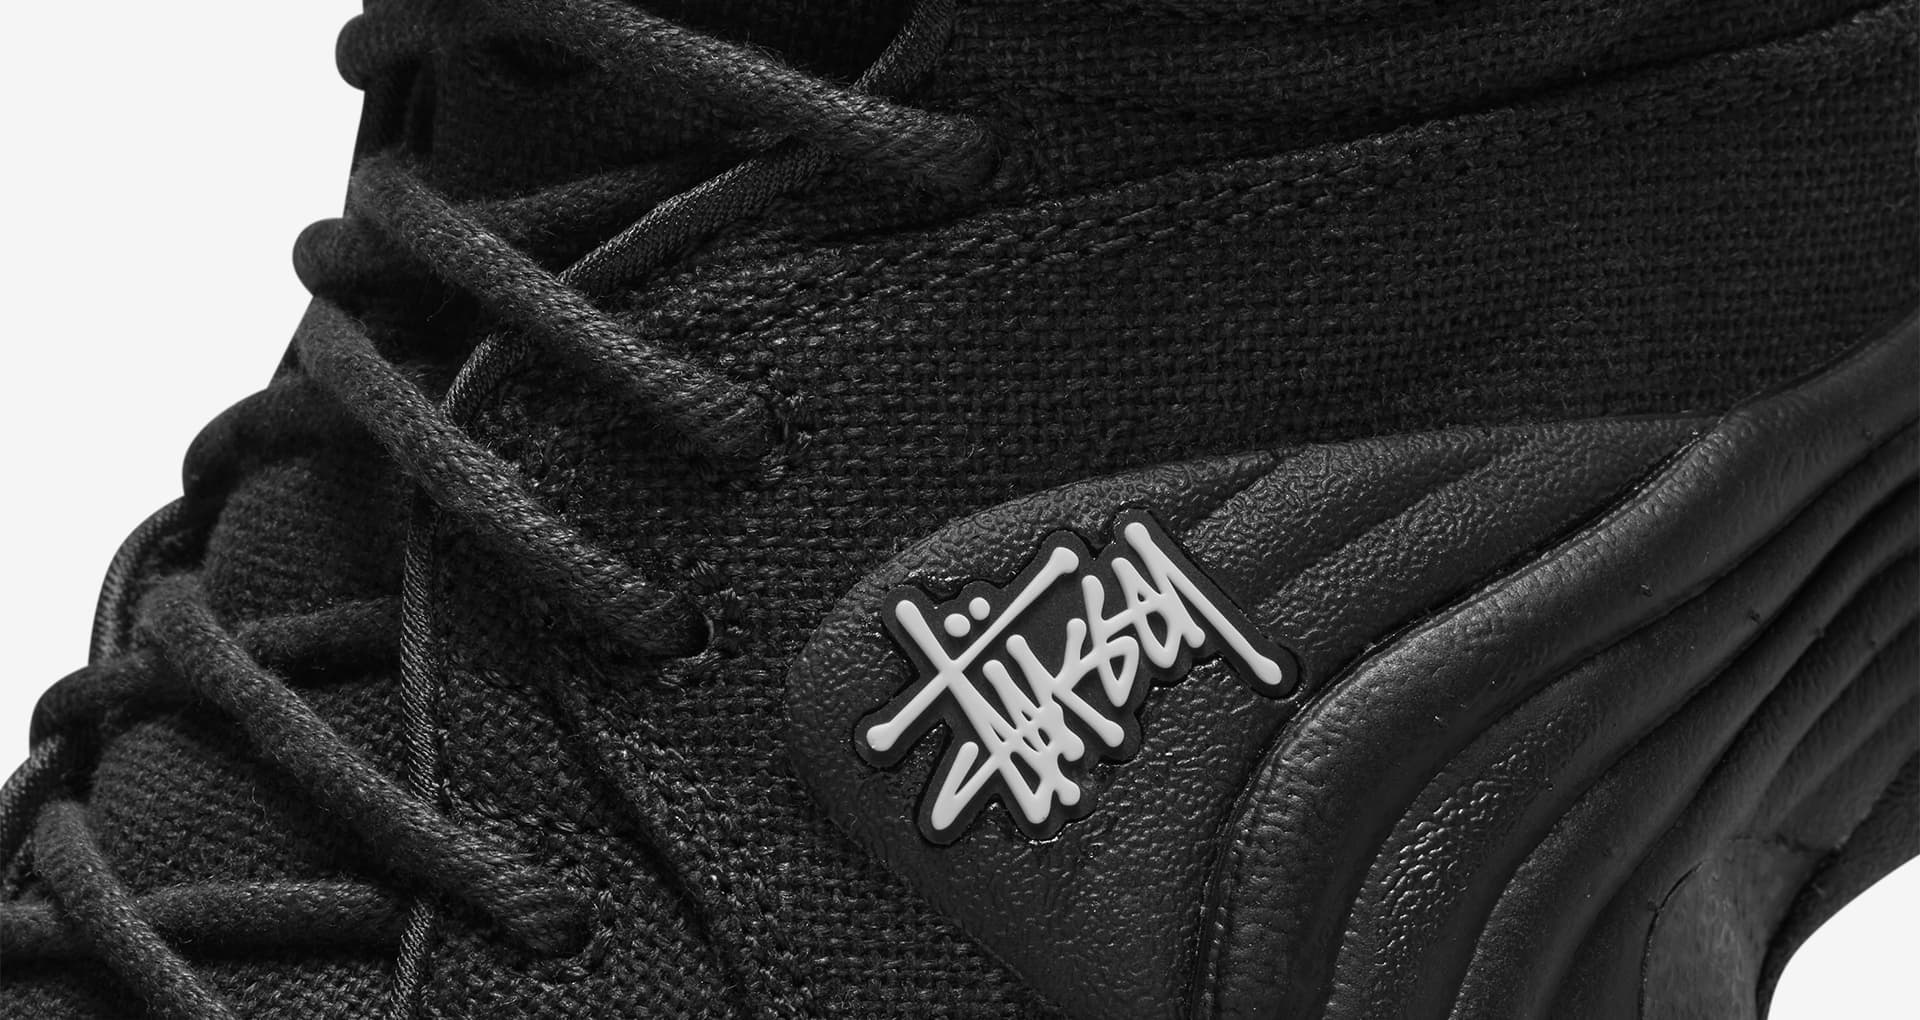 Stüssy x Nike Air Penny 2 "Black"